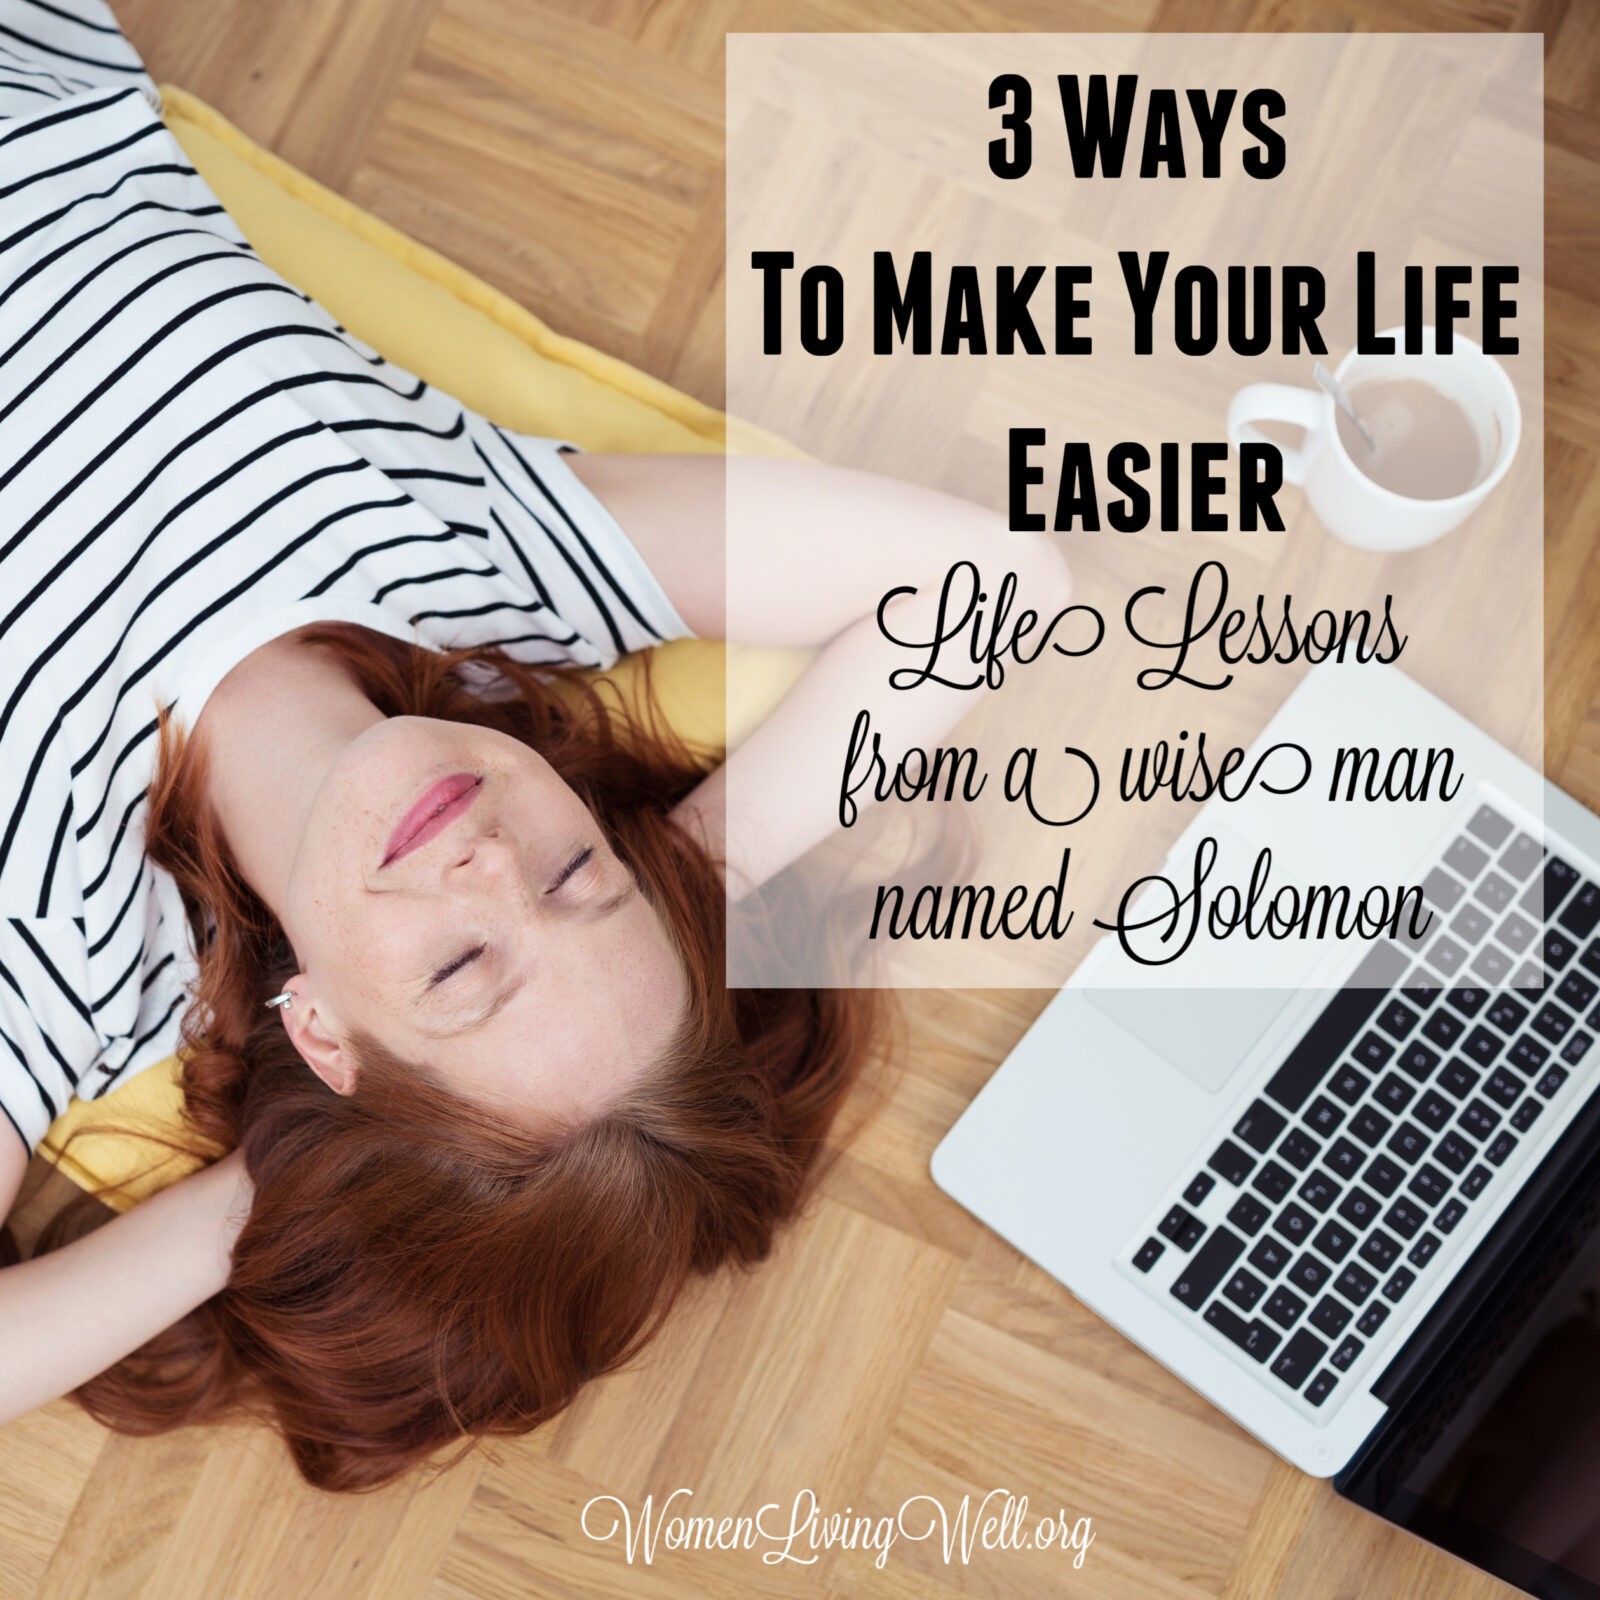 Your life easier. Make Life easy.